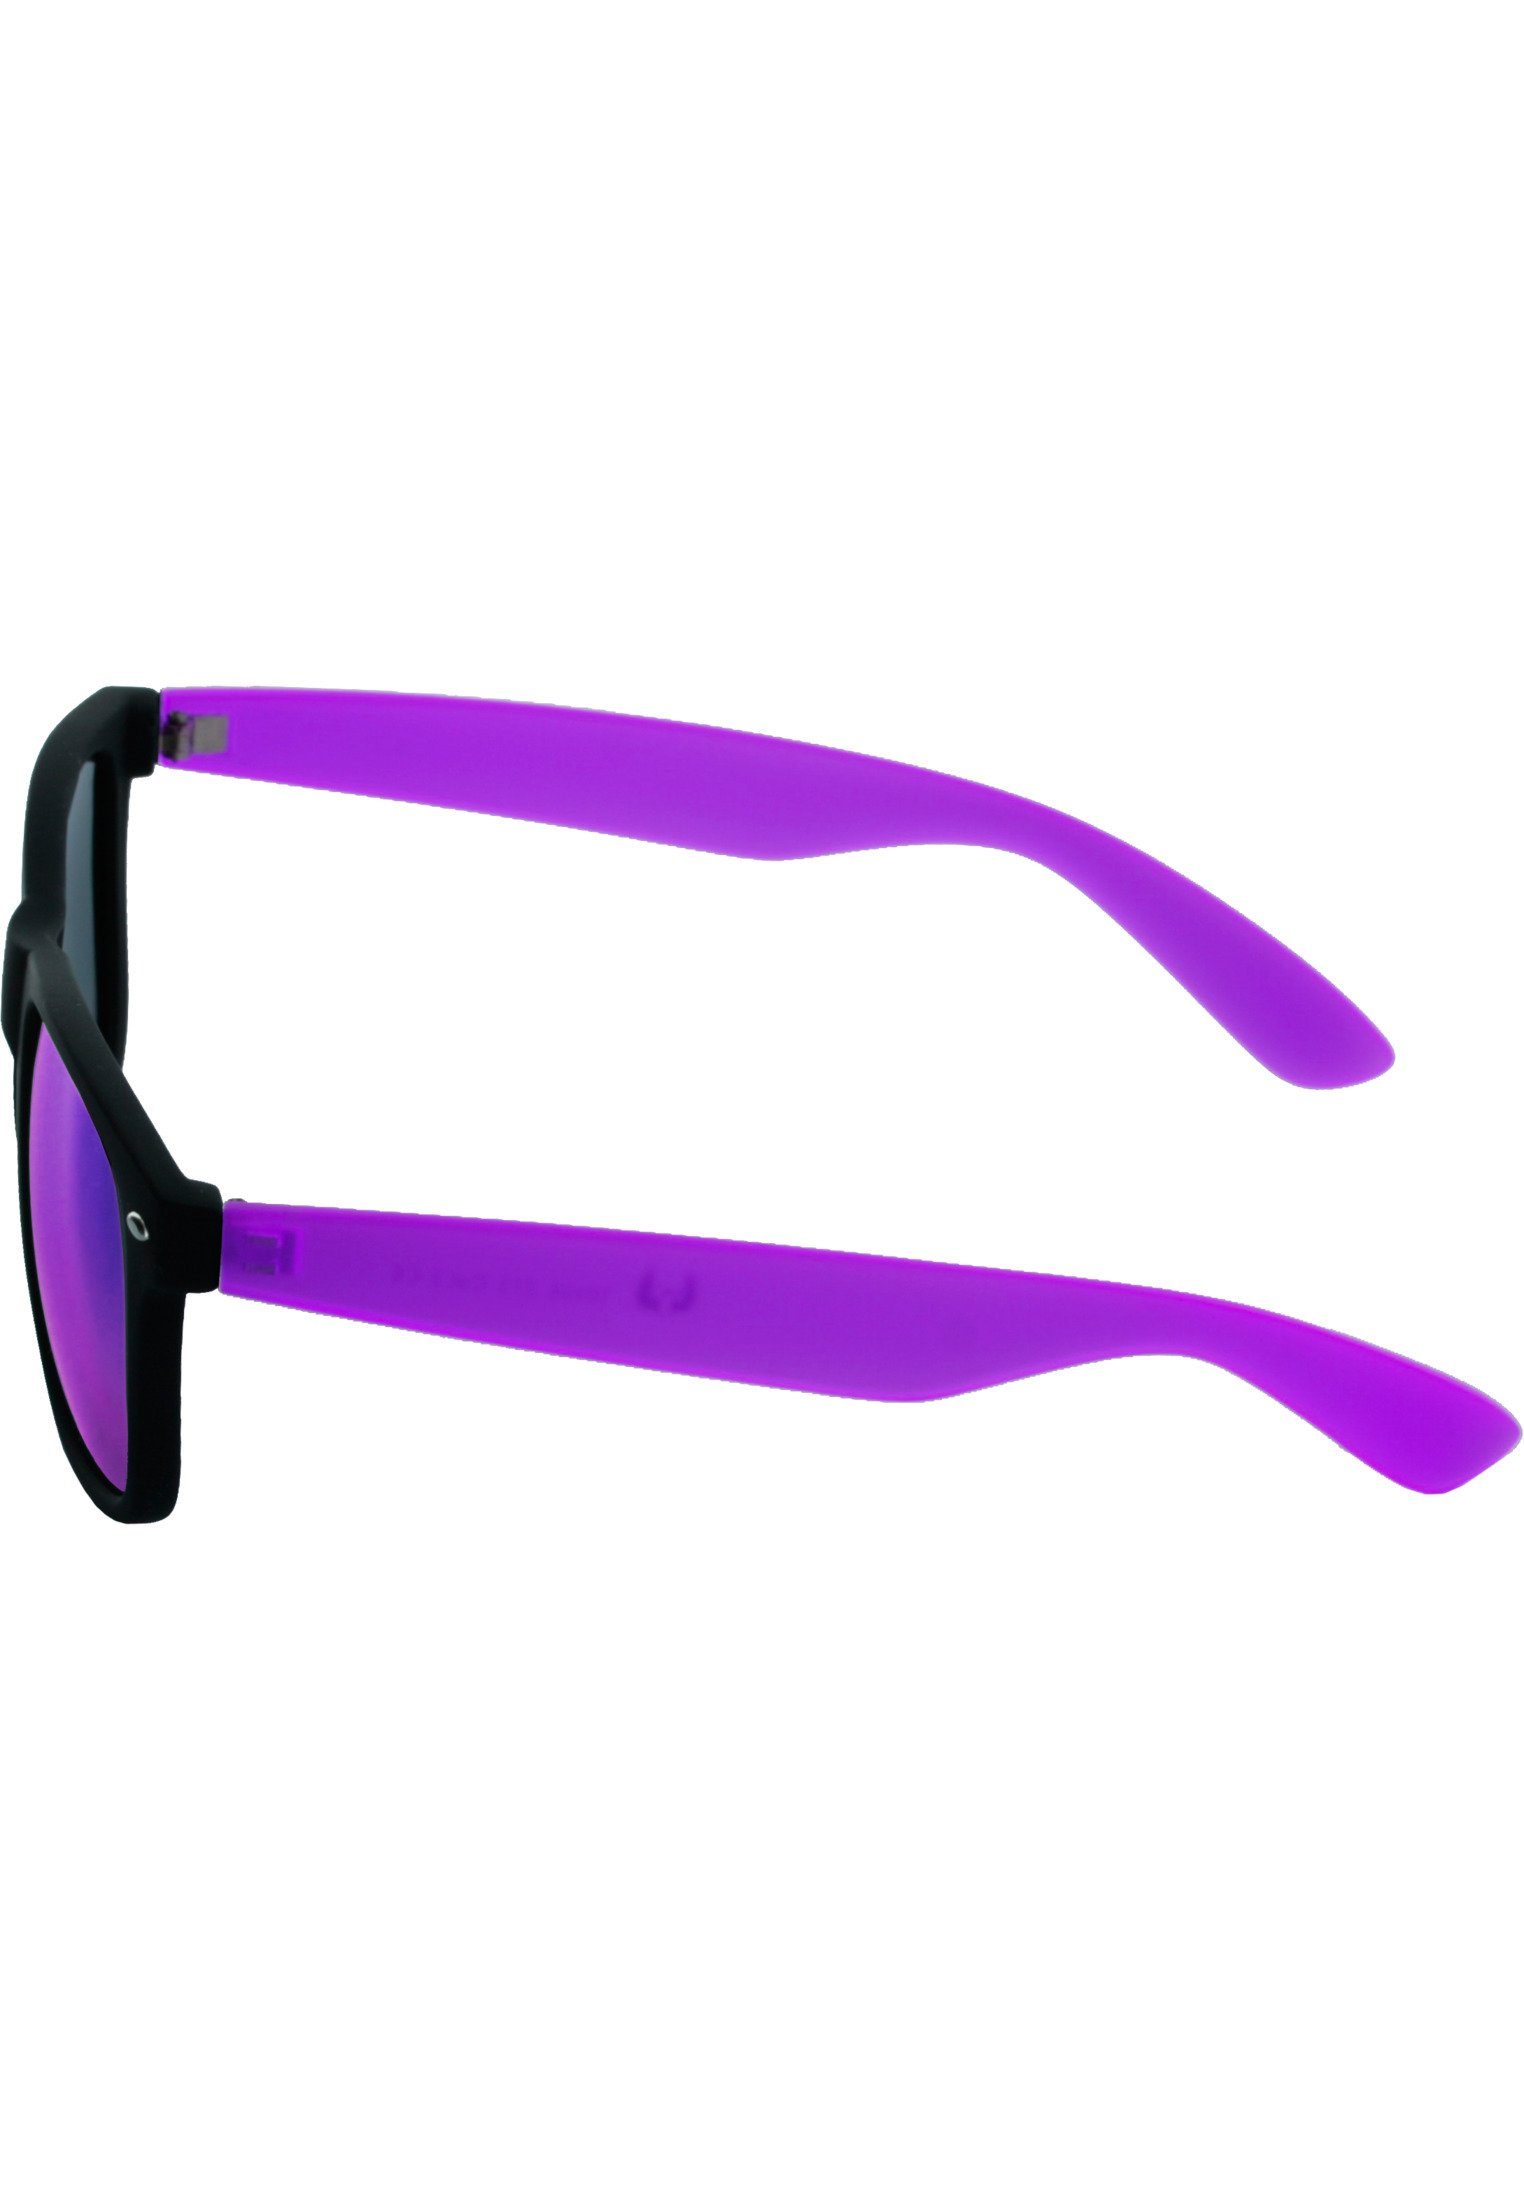 Sunglasses Mirror blk/pur/pur Likoma Accessoires MSTRDS Sonnenbrille